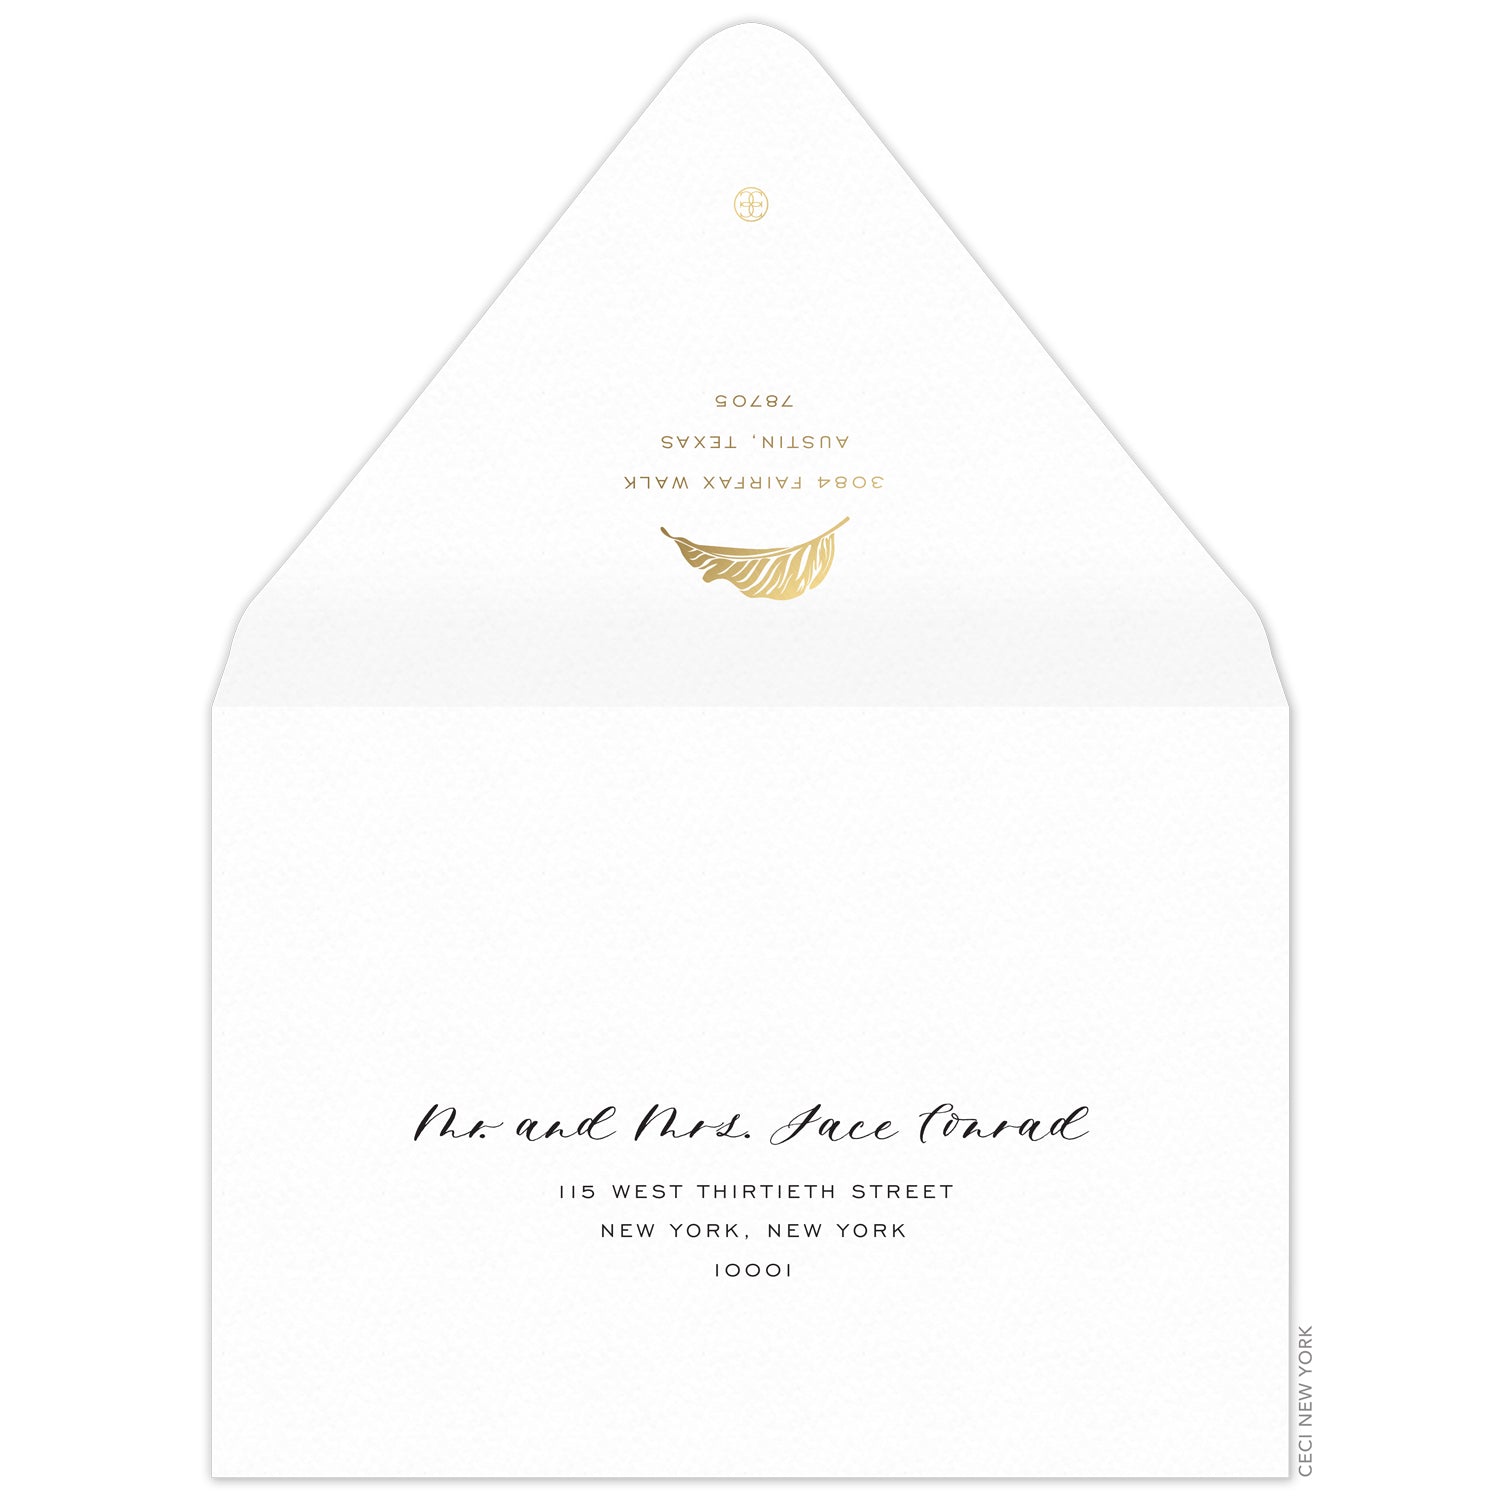 White envelope, san serif return address and modern palm leaf in gold foil on the back flap. Mailing address on the front of the envelope.